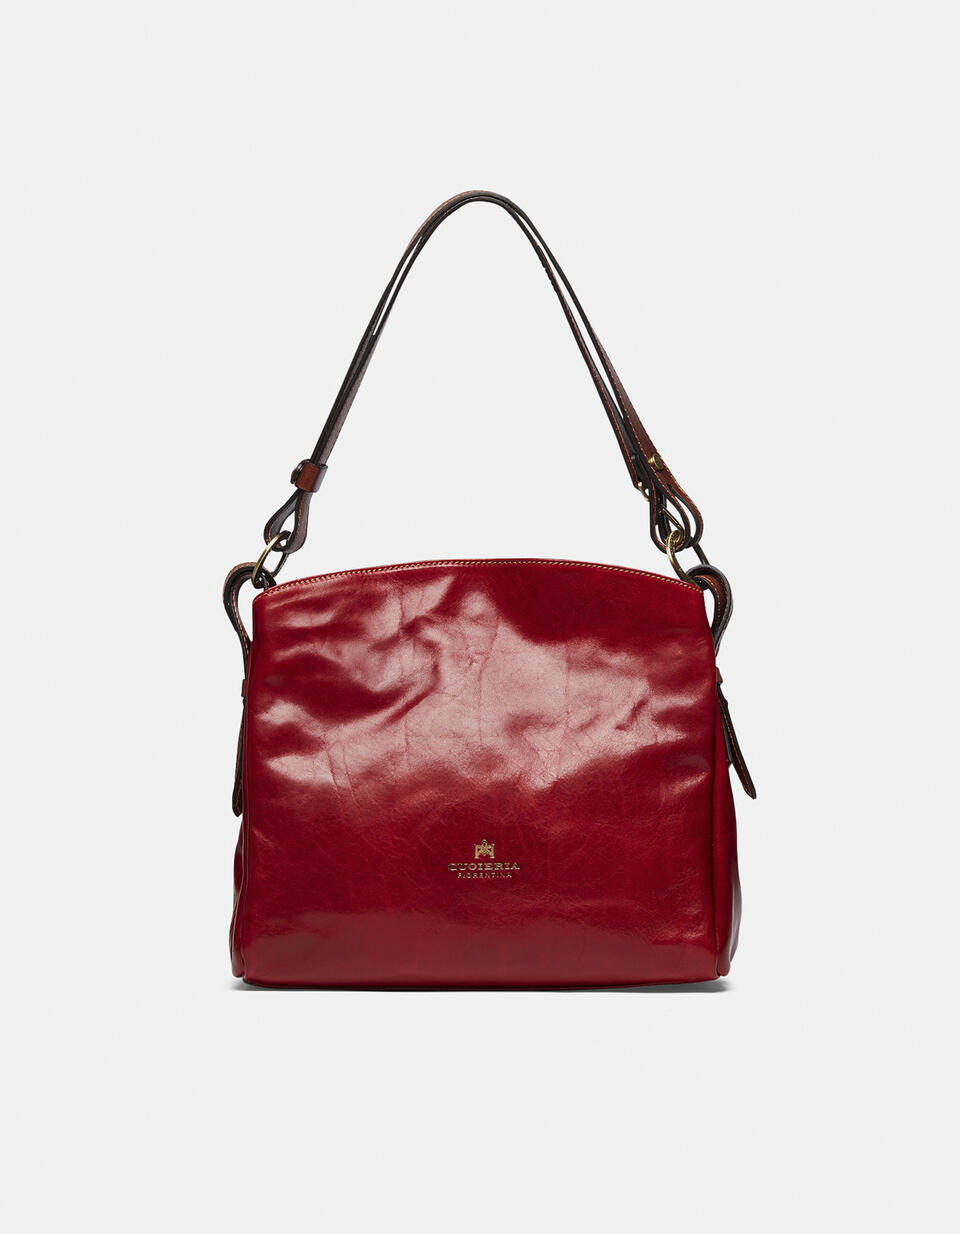 Large leather shoulder bag - Shoulder Bags - WOMEN'S BAGS | bags ROSSOBICOLORE - Shoulder Bags - WOMEN'S BAGS | bagsCuoieria Fiorentina